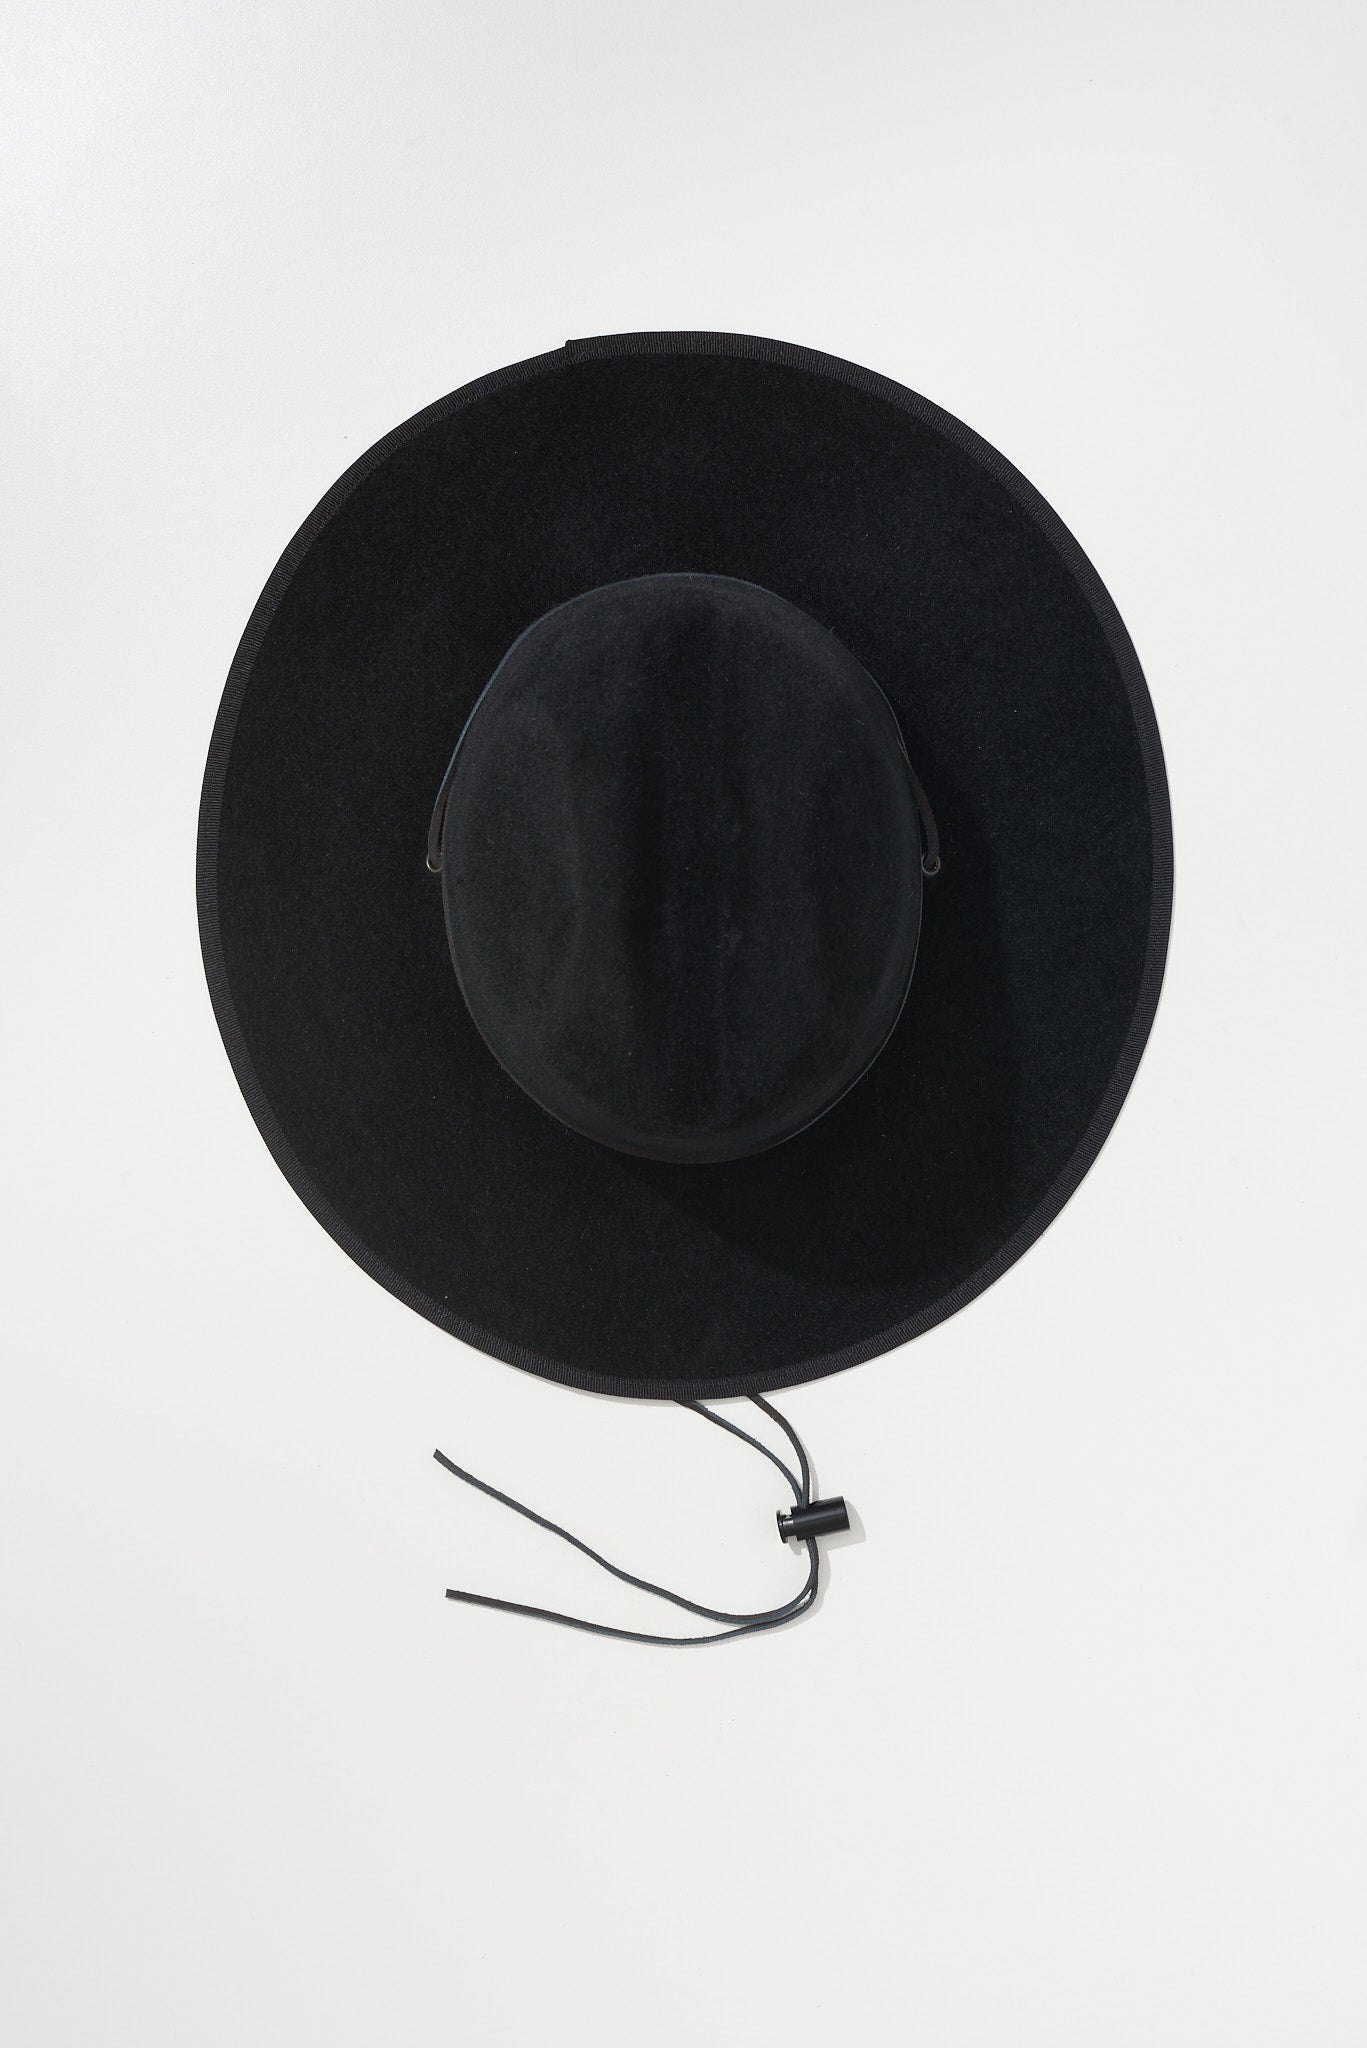 Savoy Hat in Black Velour Felt w/ Drawstring